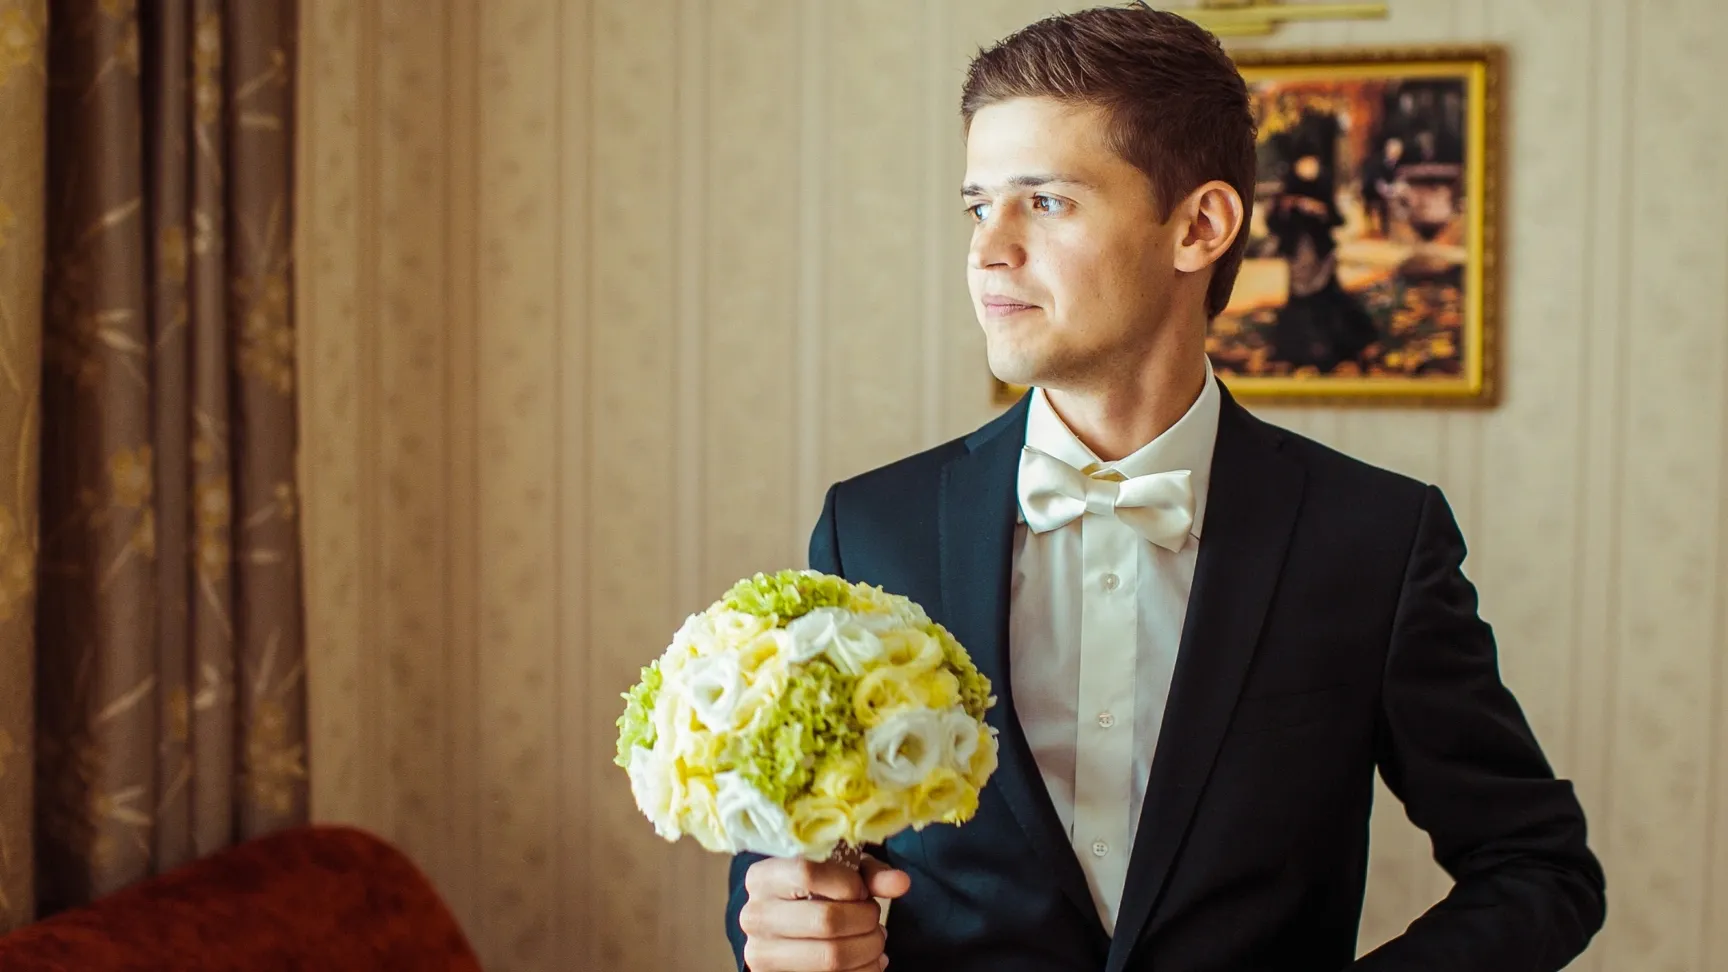 Все серьезно — он уже жених. Фото: pyrozhenka / Shutterstock / Fotodom